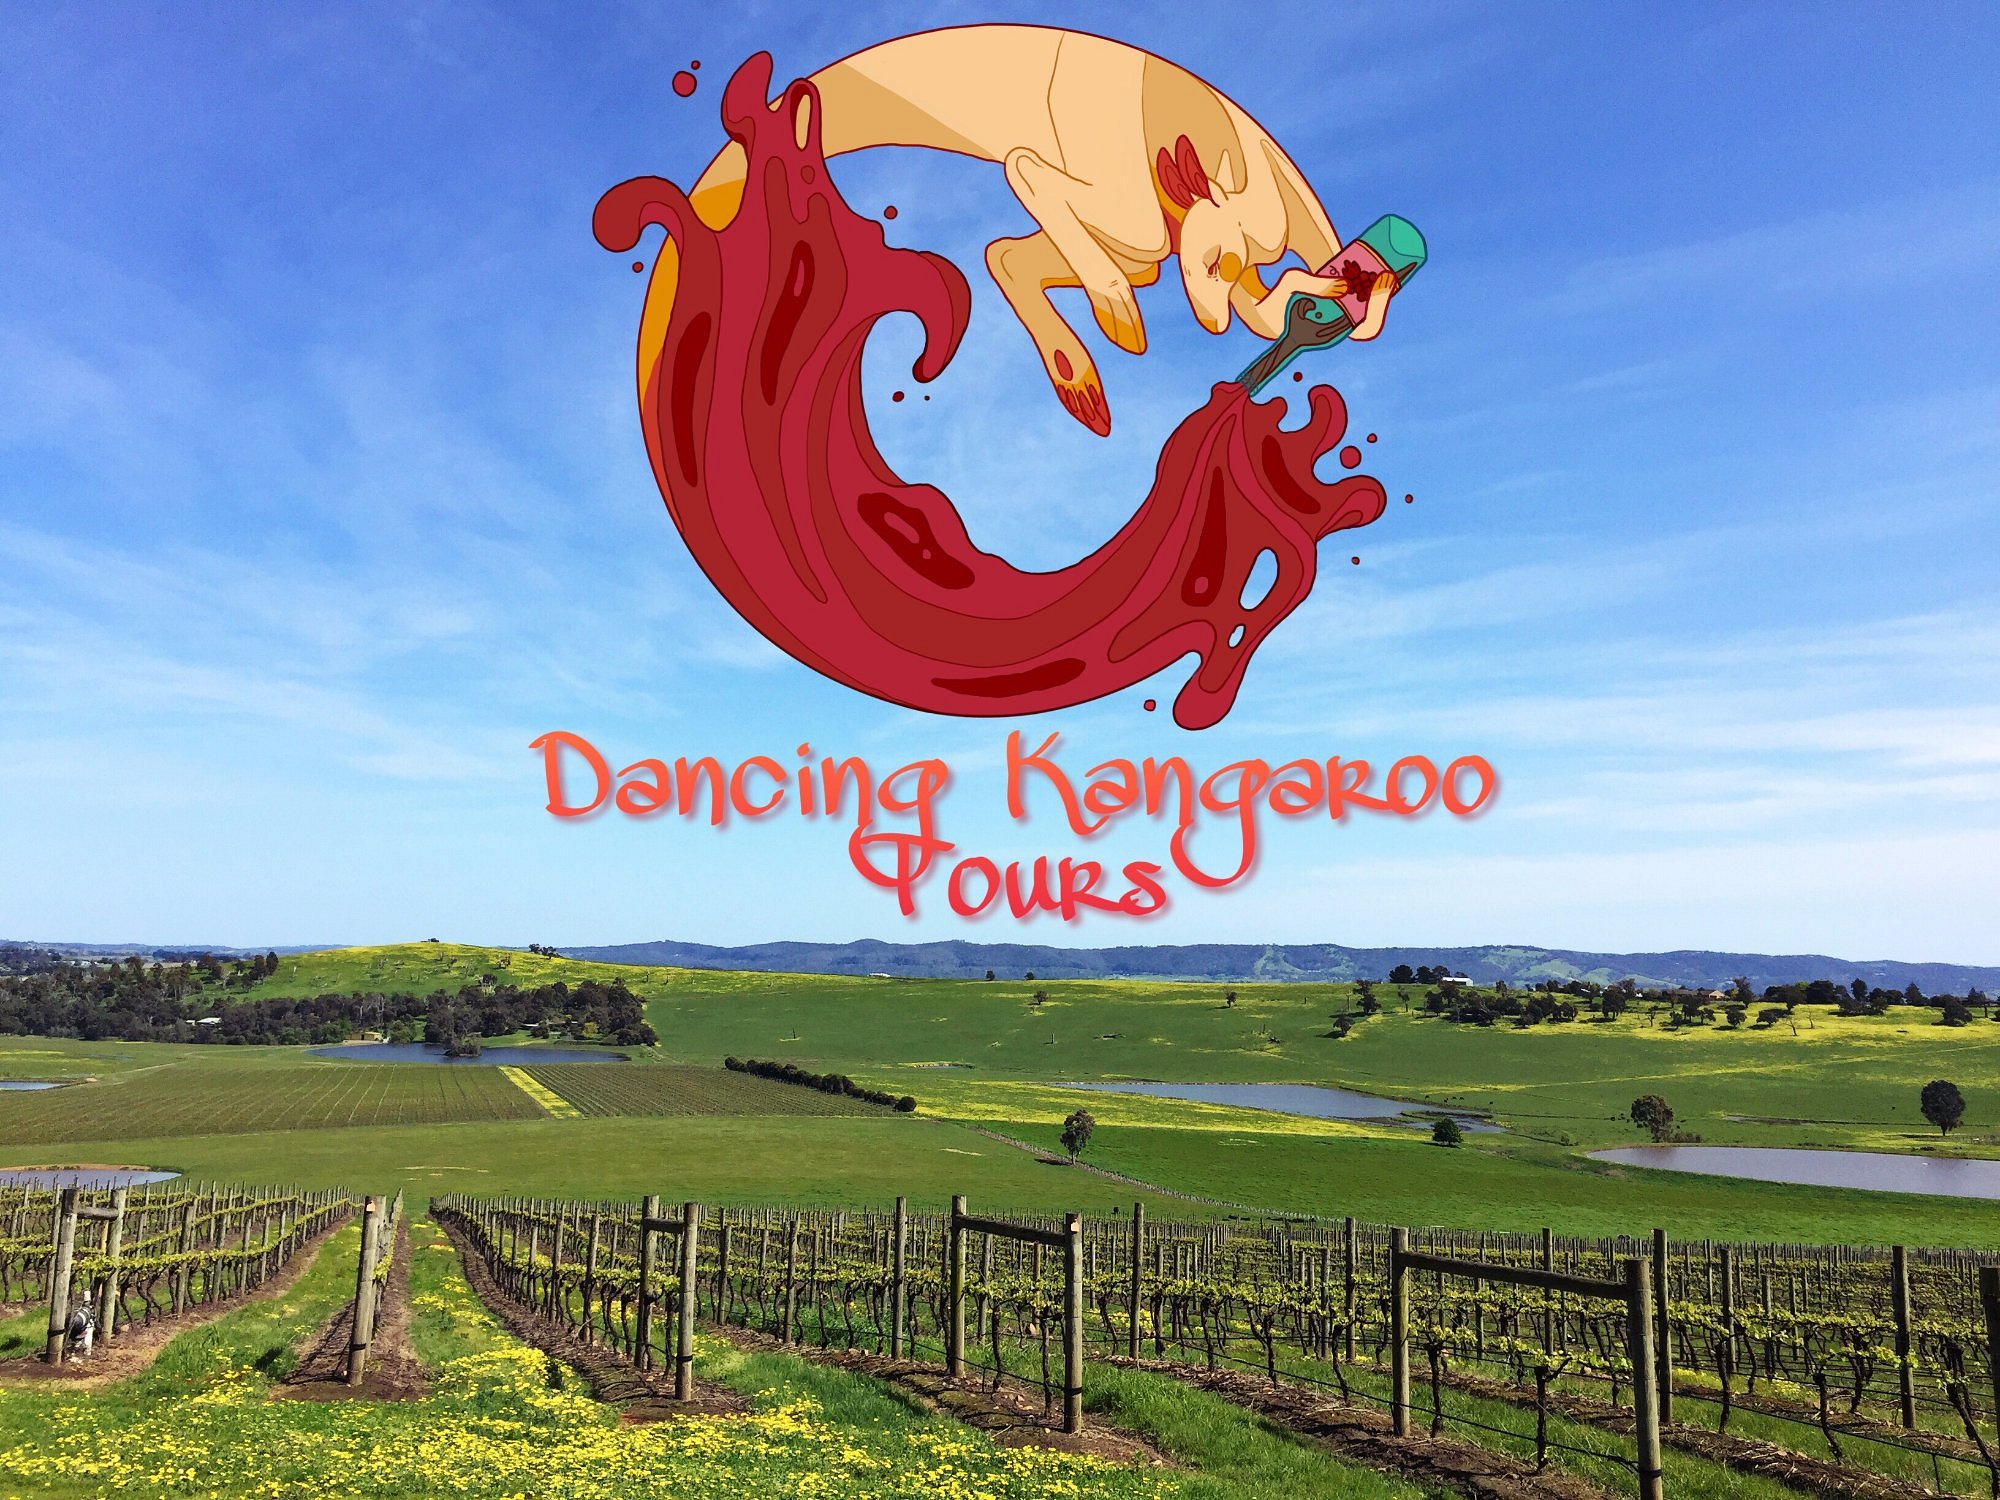 dancing kangaroo tour